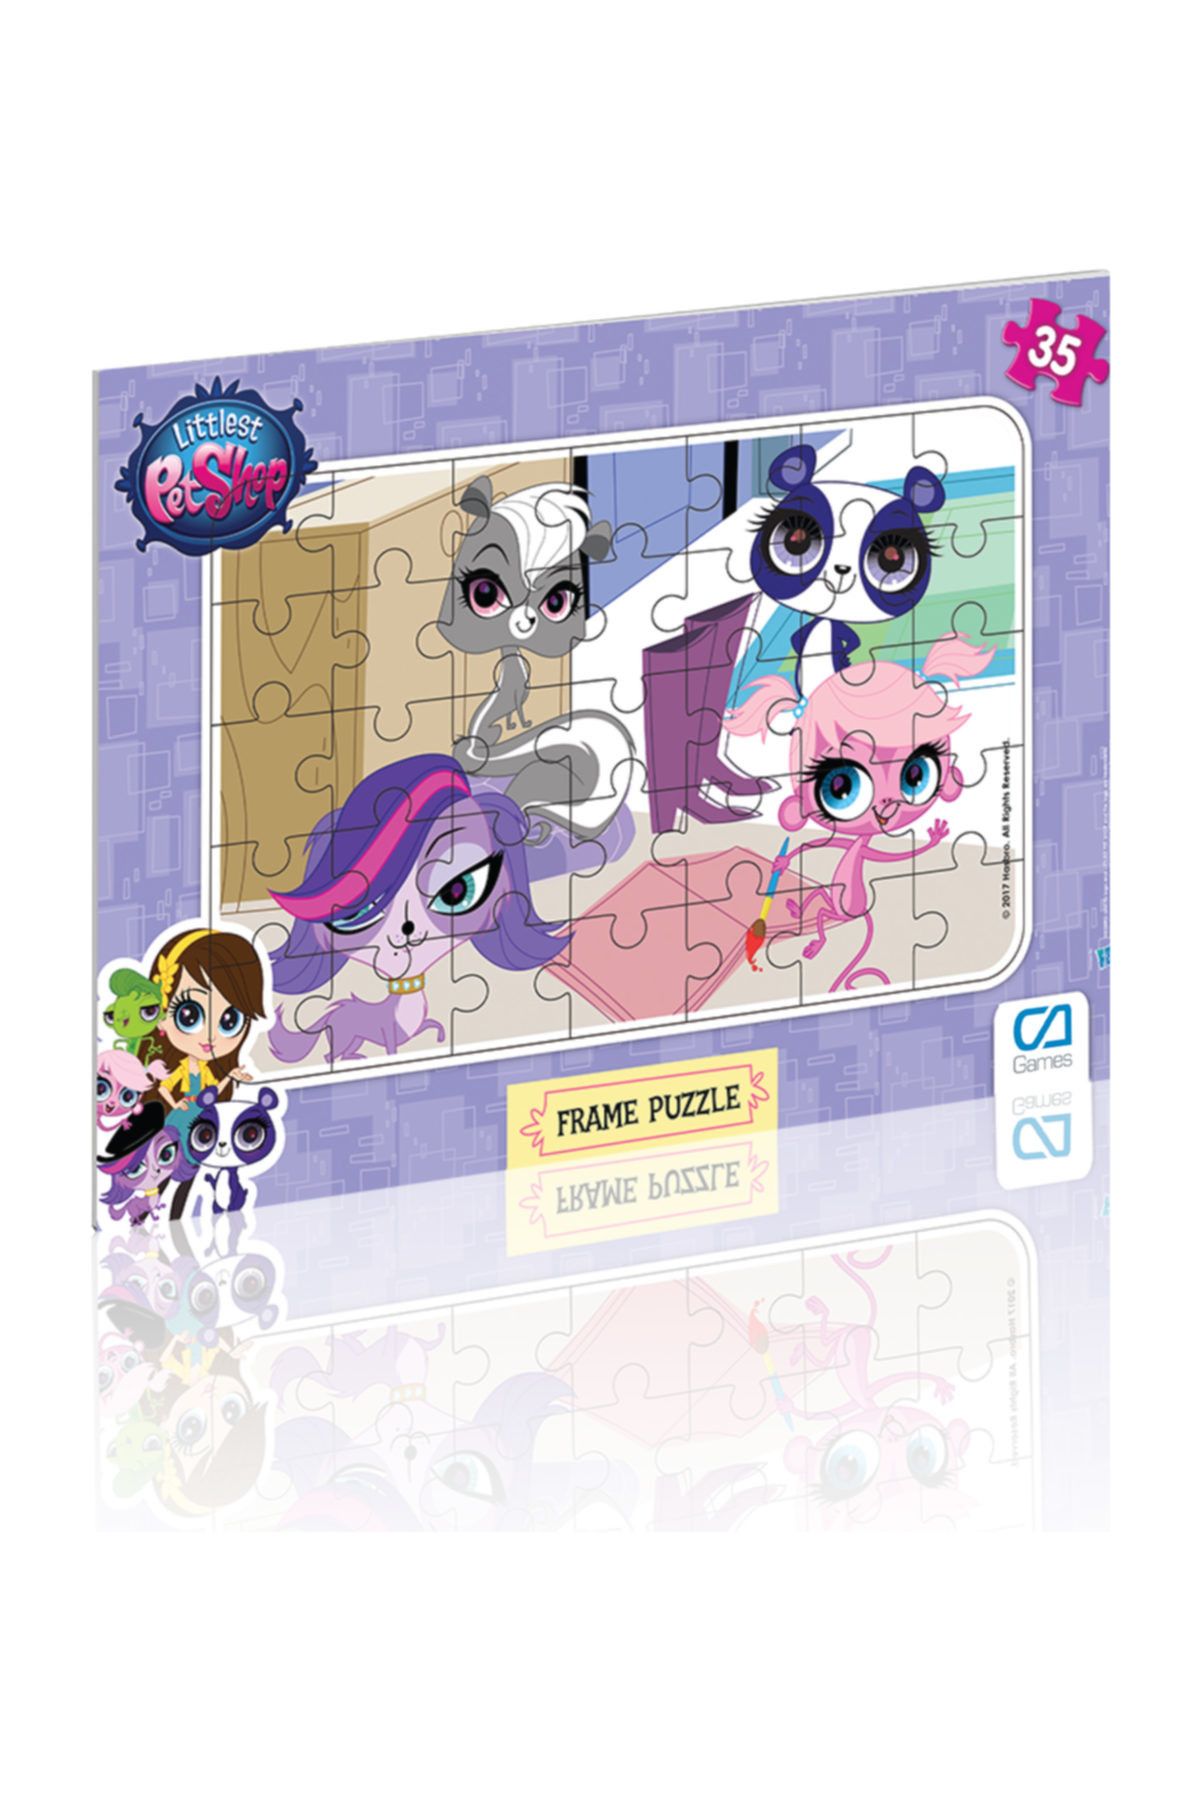 CA Games Minişler 35 Frame Puzzle - 5019 /